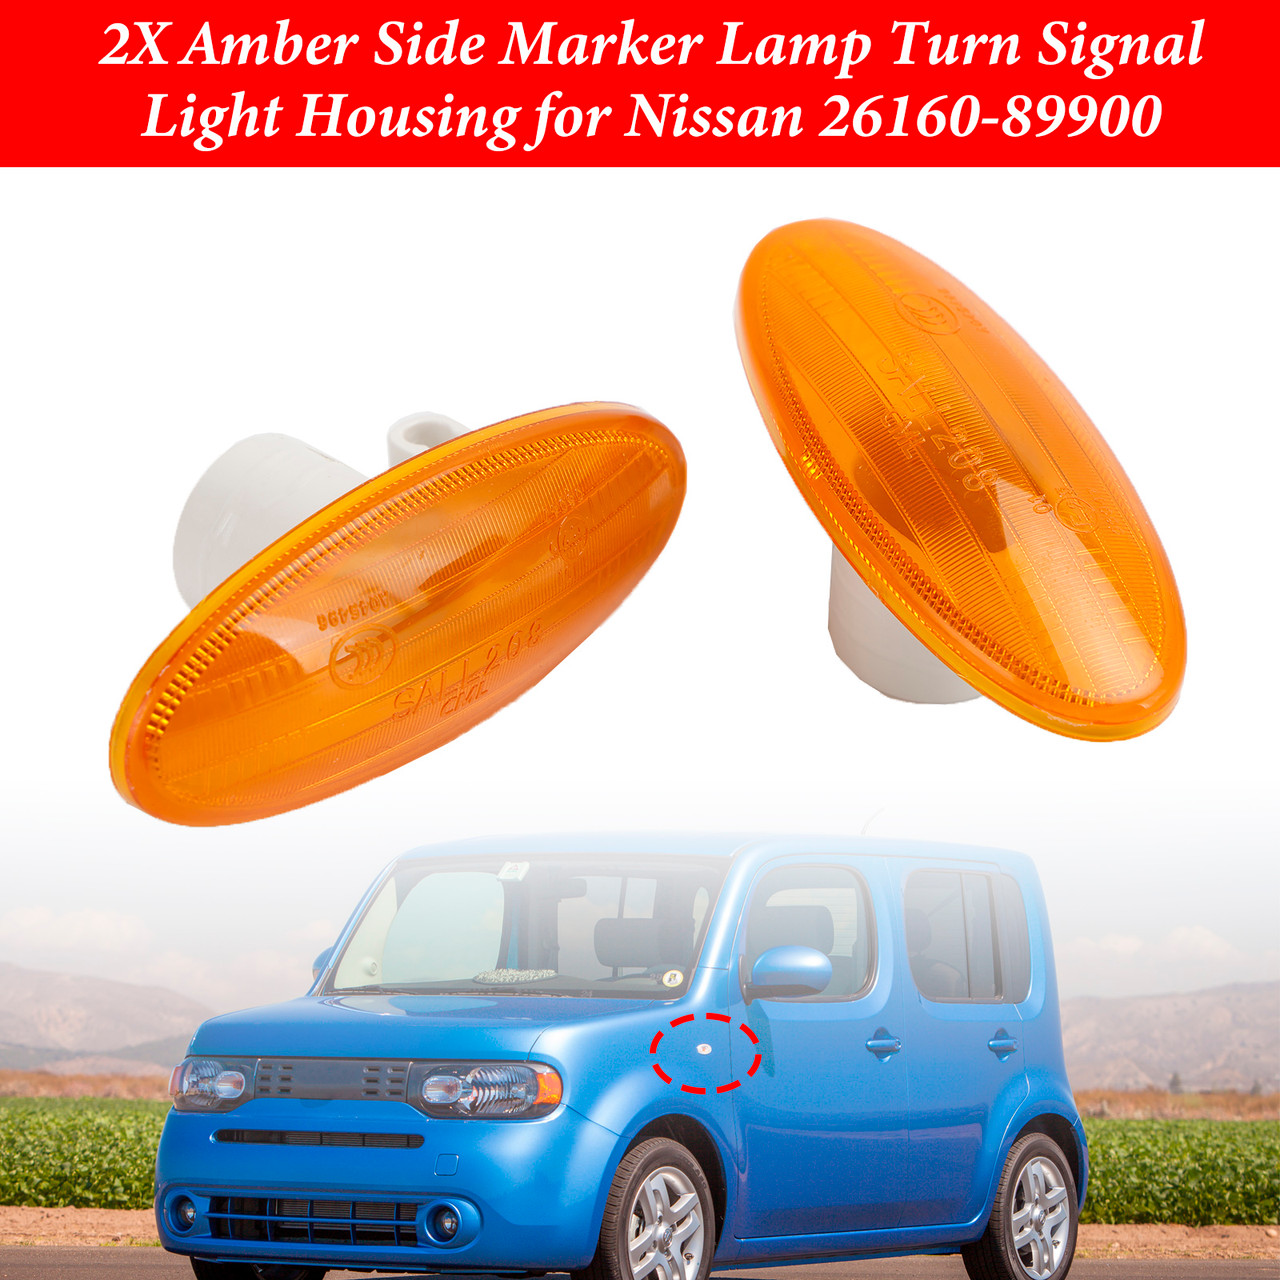 2X Amber Side Marker Lamp Turn Signal Light Housing for Nissan 26160-89900